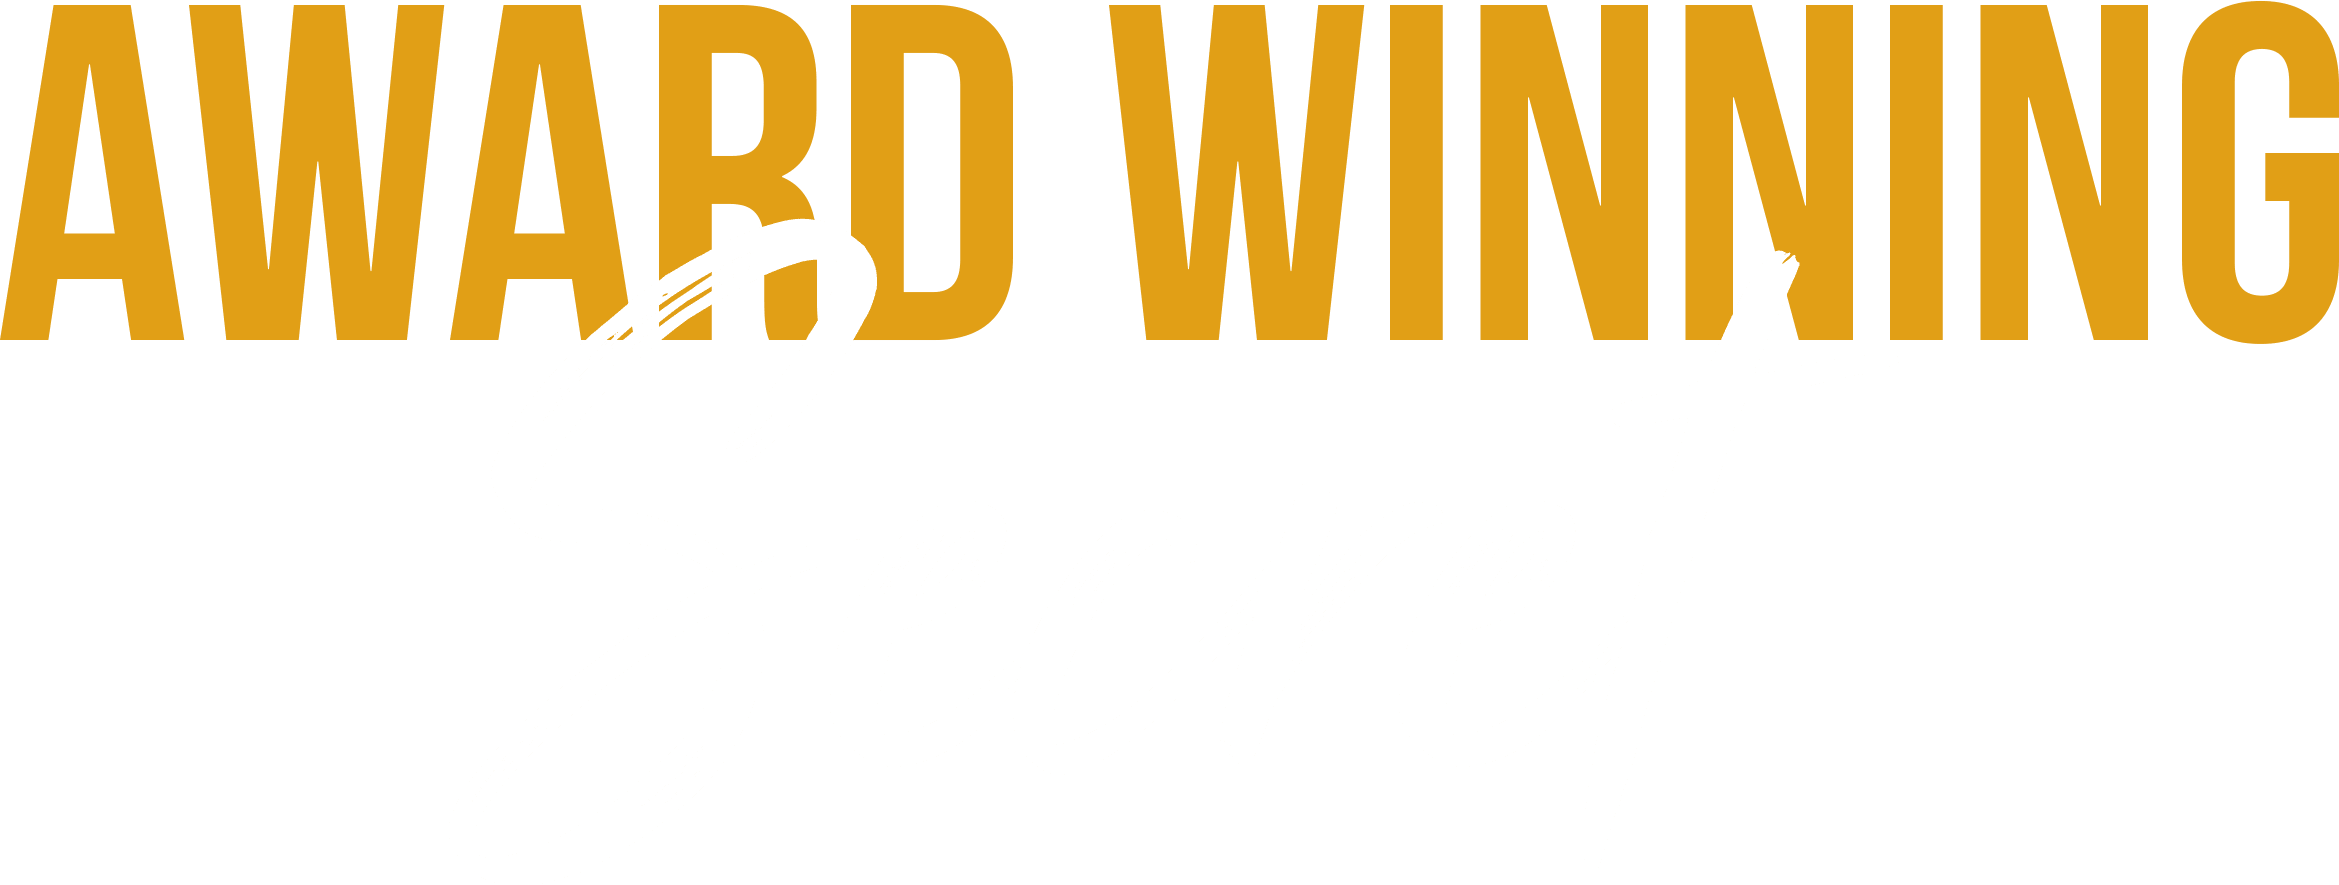 Award Winning Secret